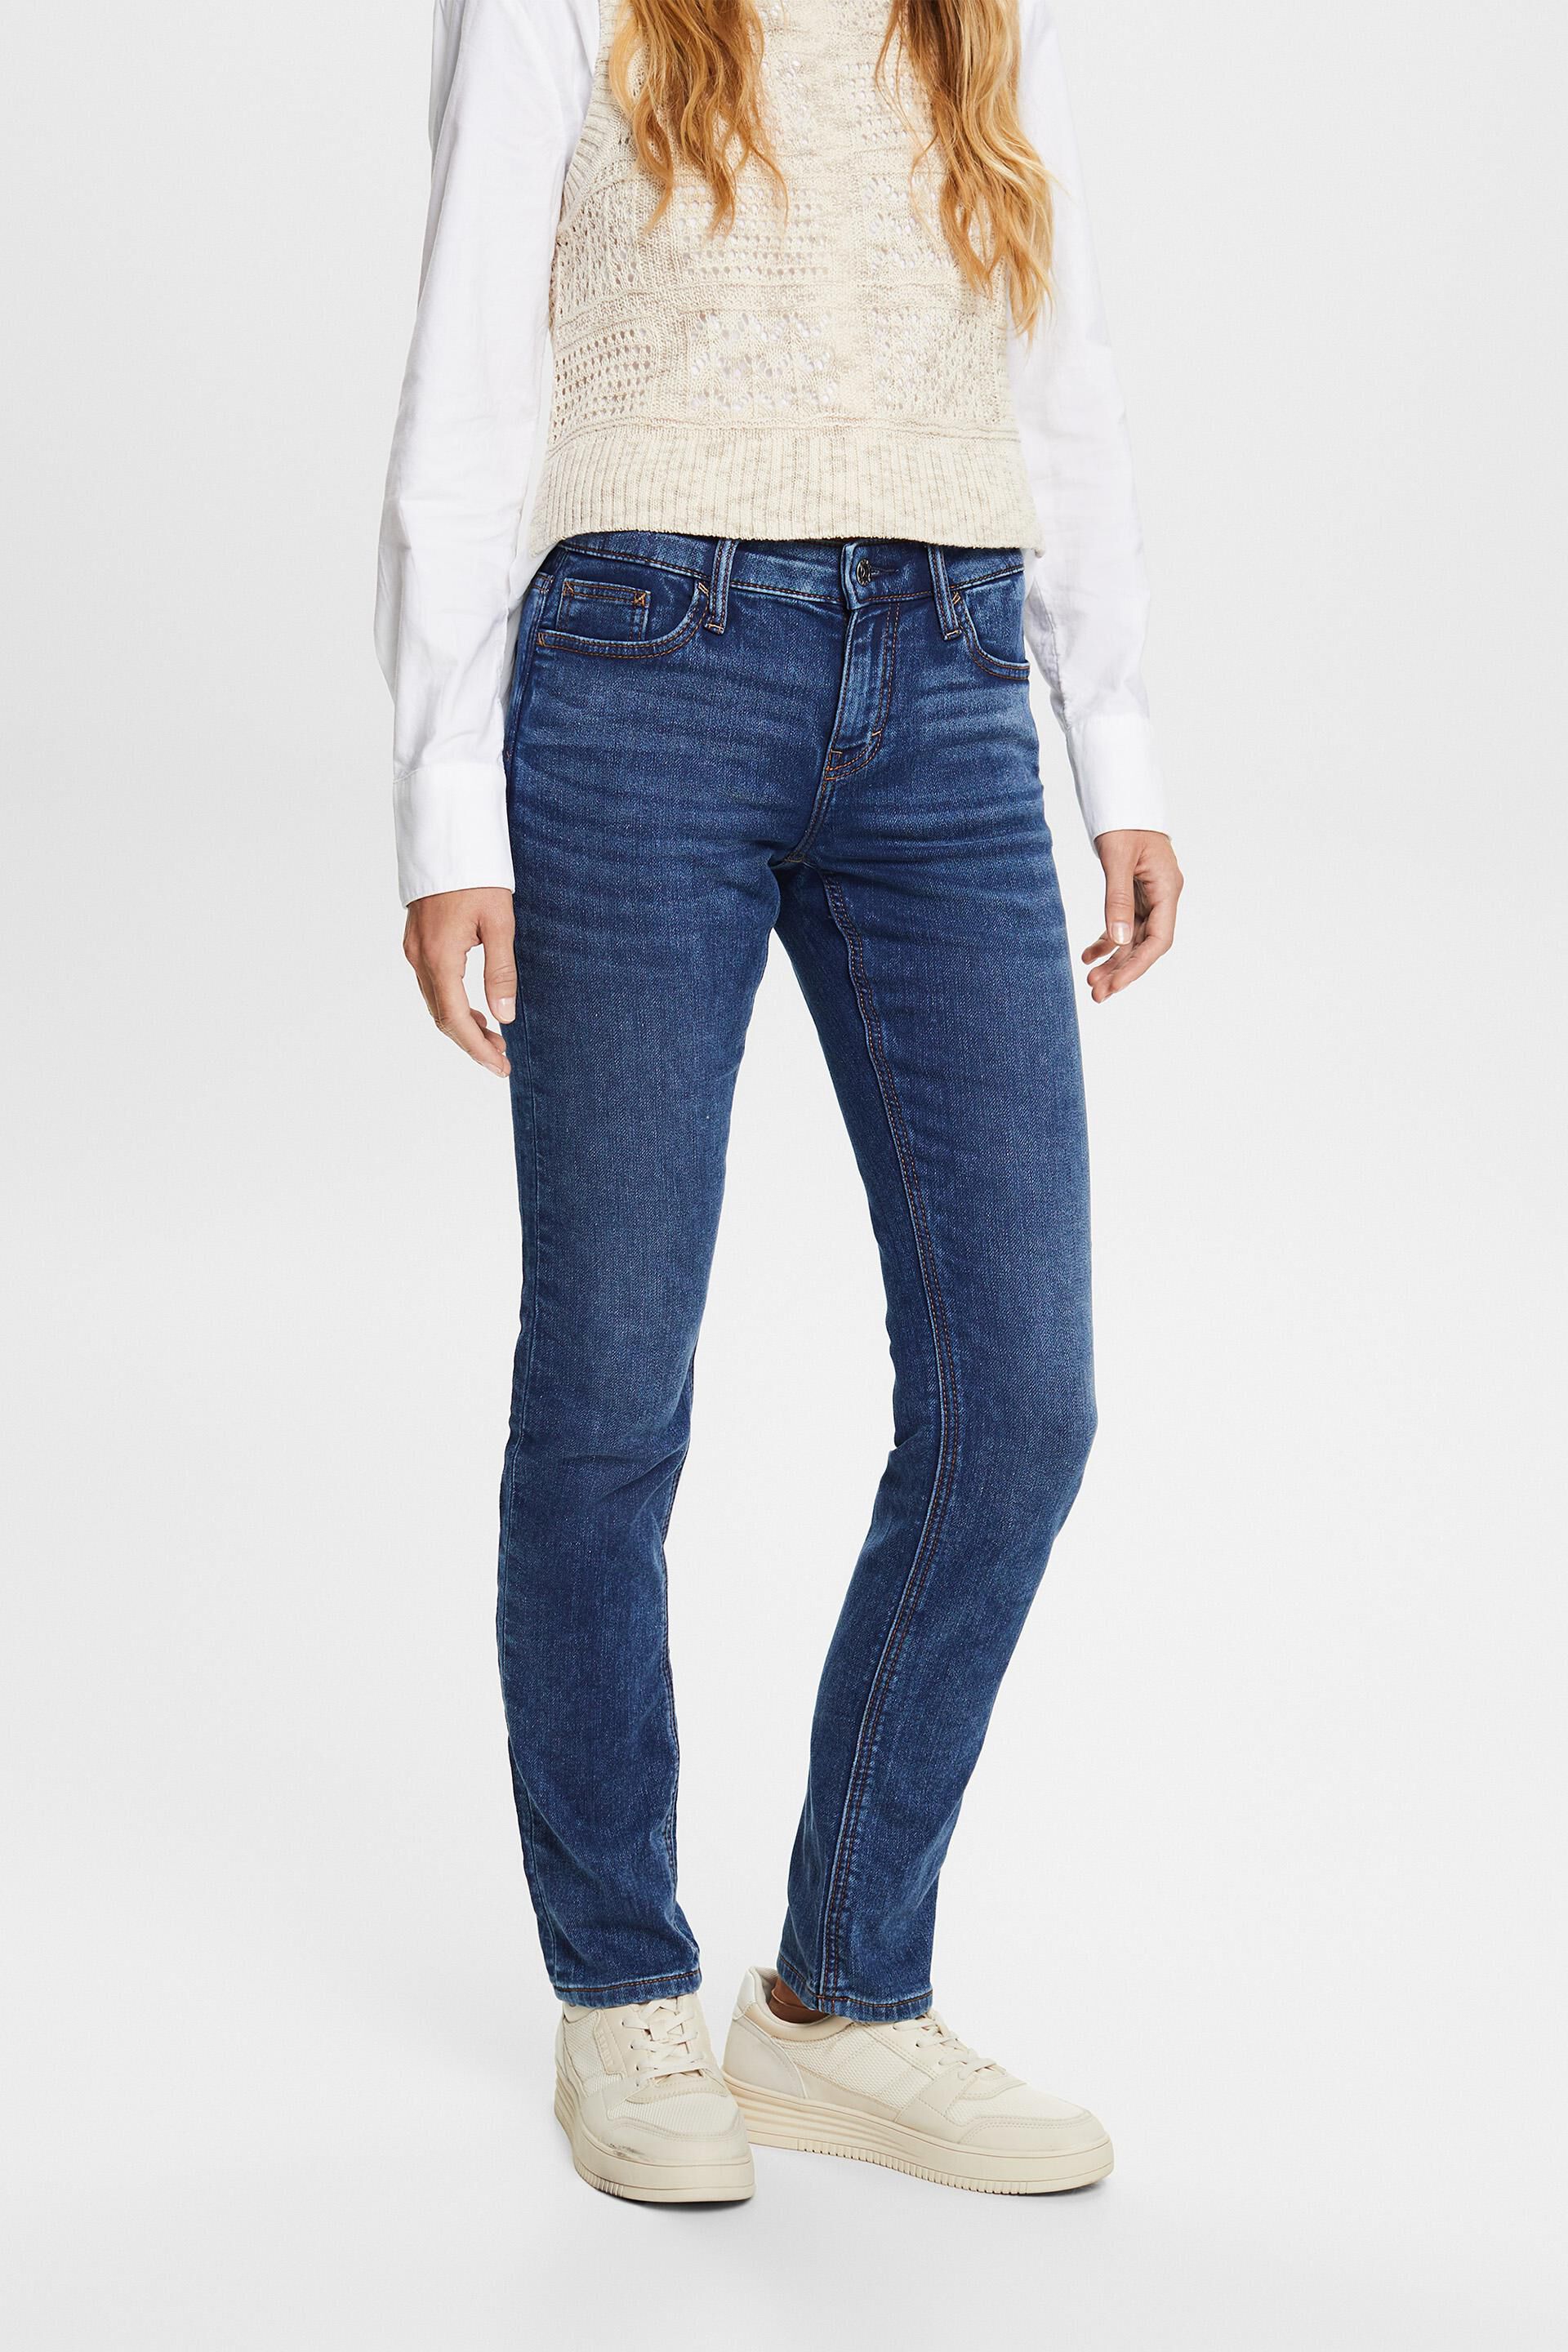 Esprit Slim jeans stretch fit